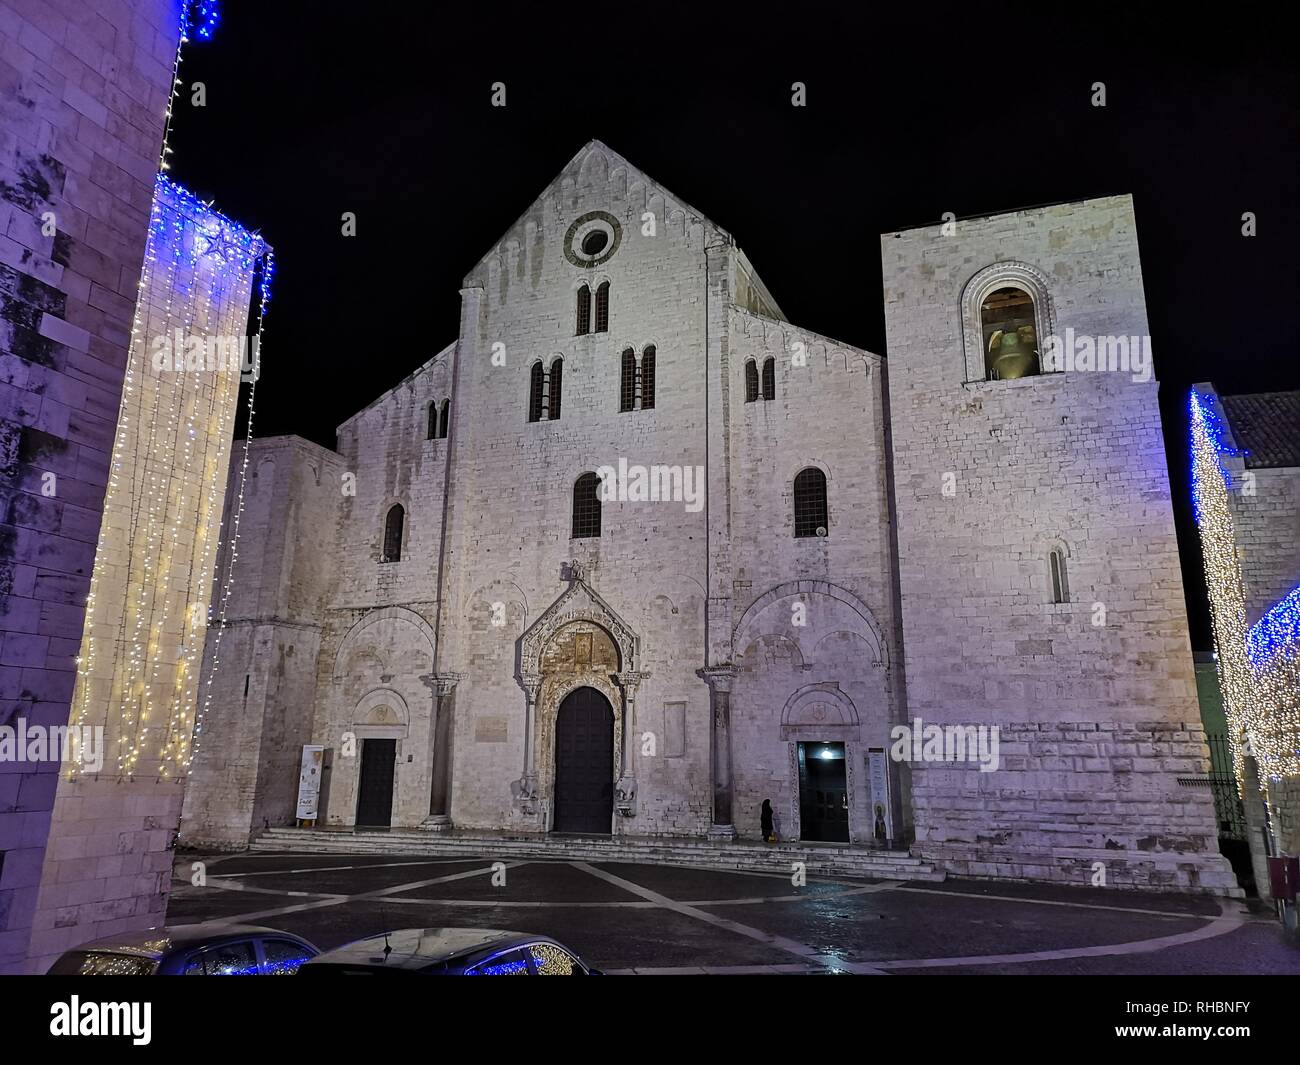 The facade of Basilica of Saint Nicholas at night in Bari, Apulia - Italy Stock Photo